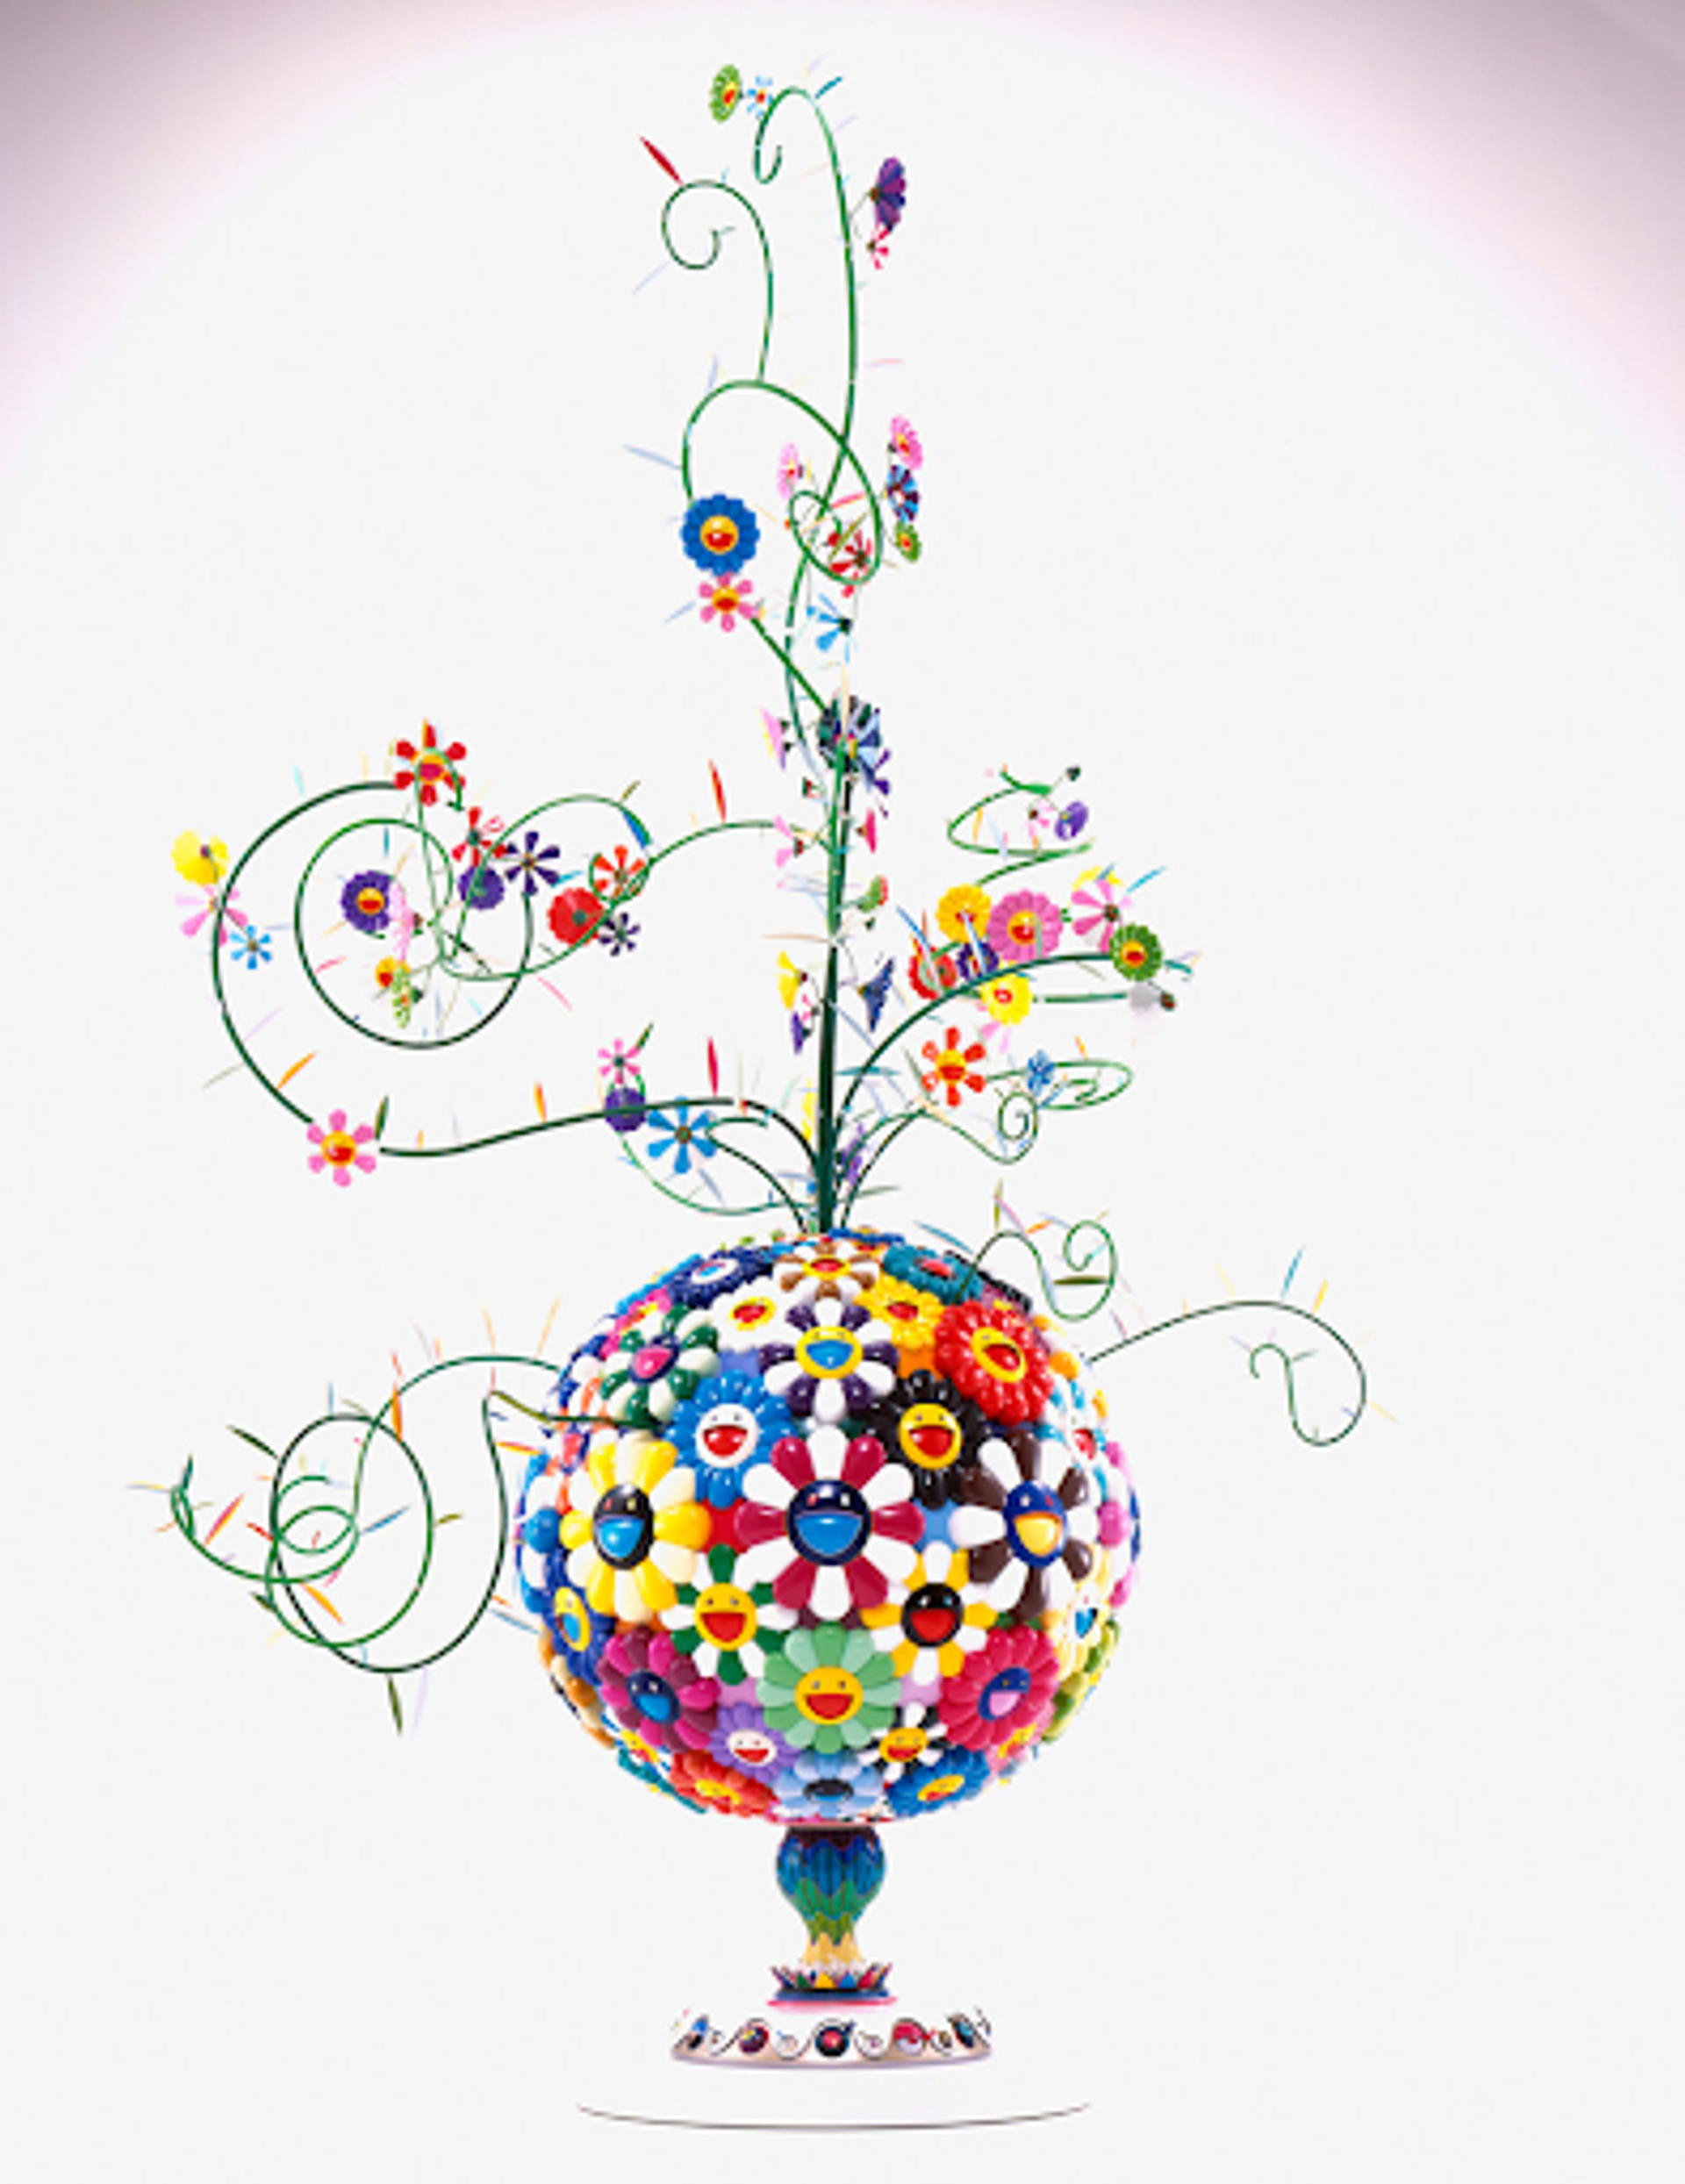 Takashi Murkami’s Flower Matango (b). A multicoloured fibreglass sculpture of flowers with smiling faces.